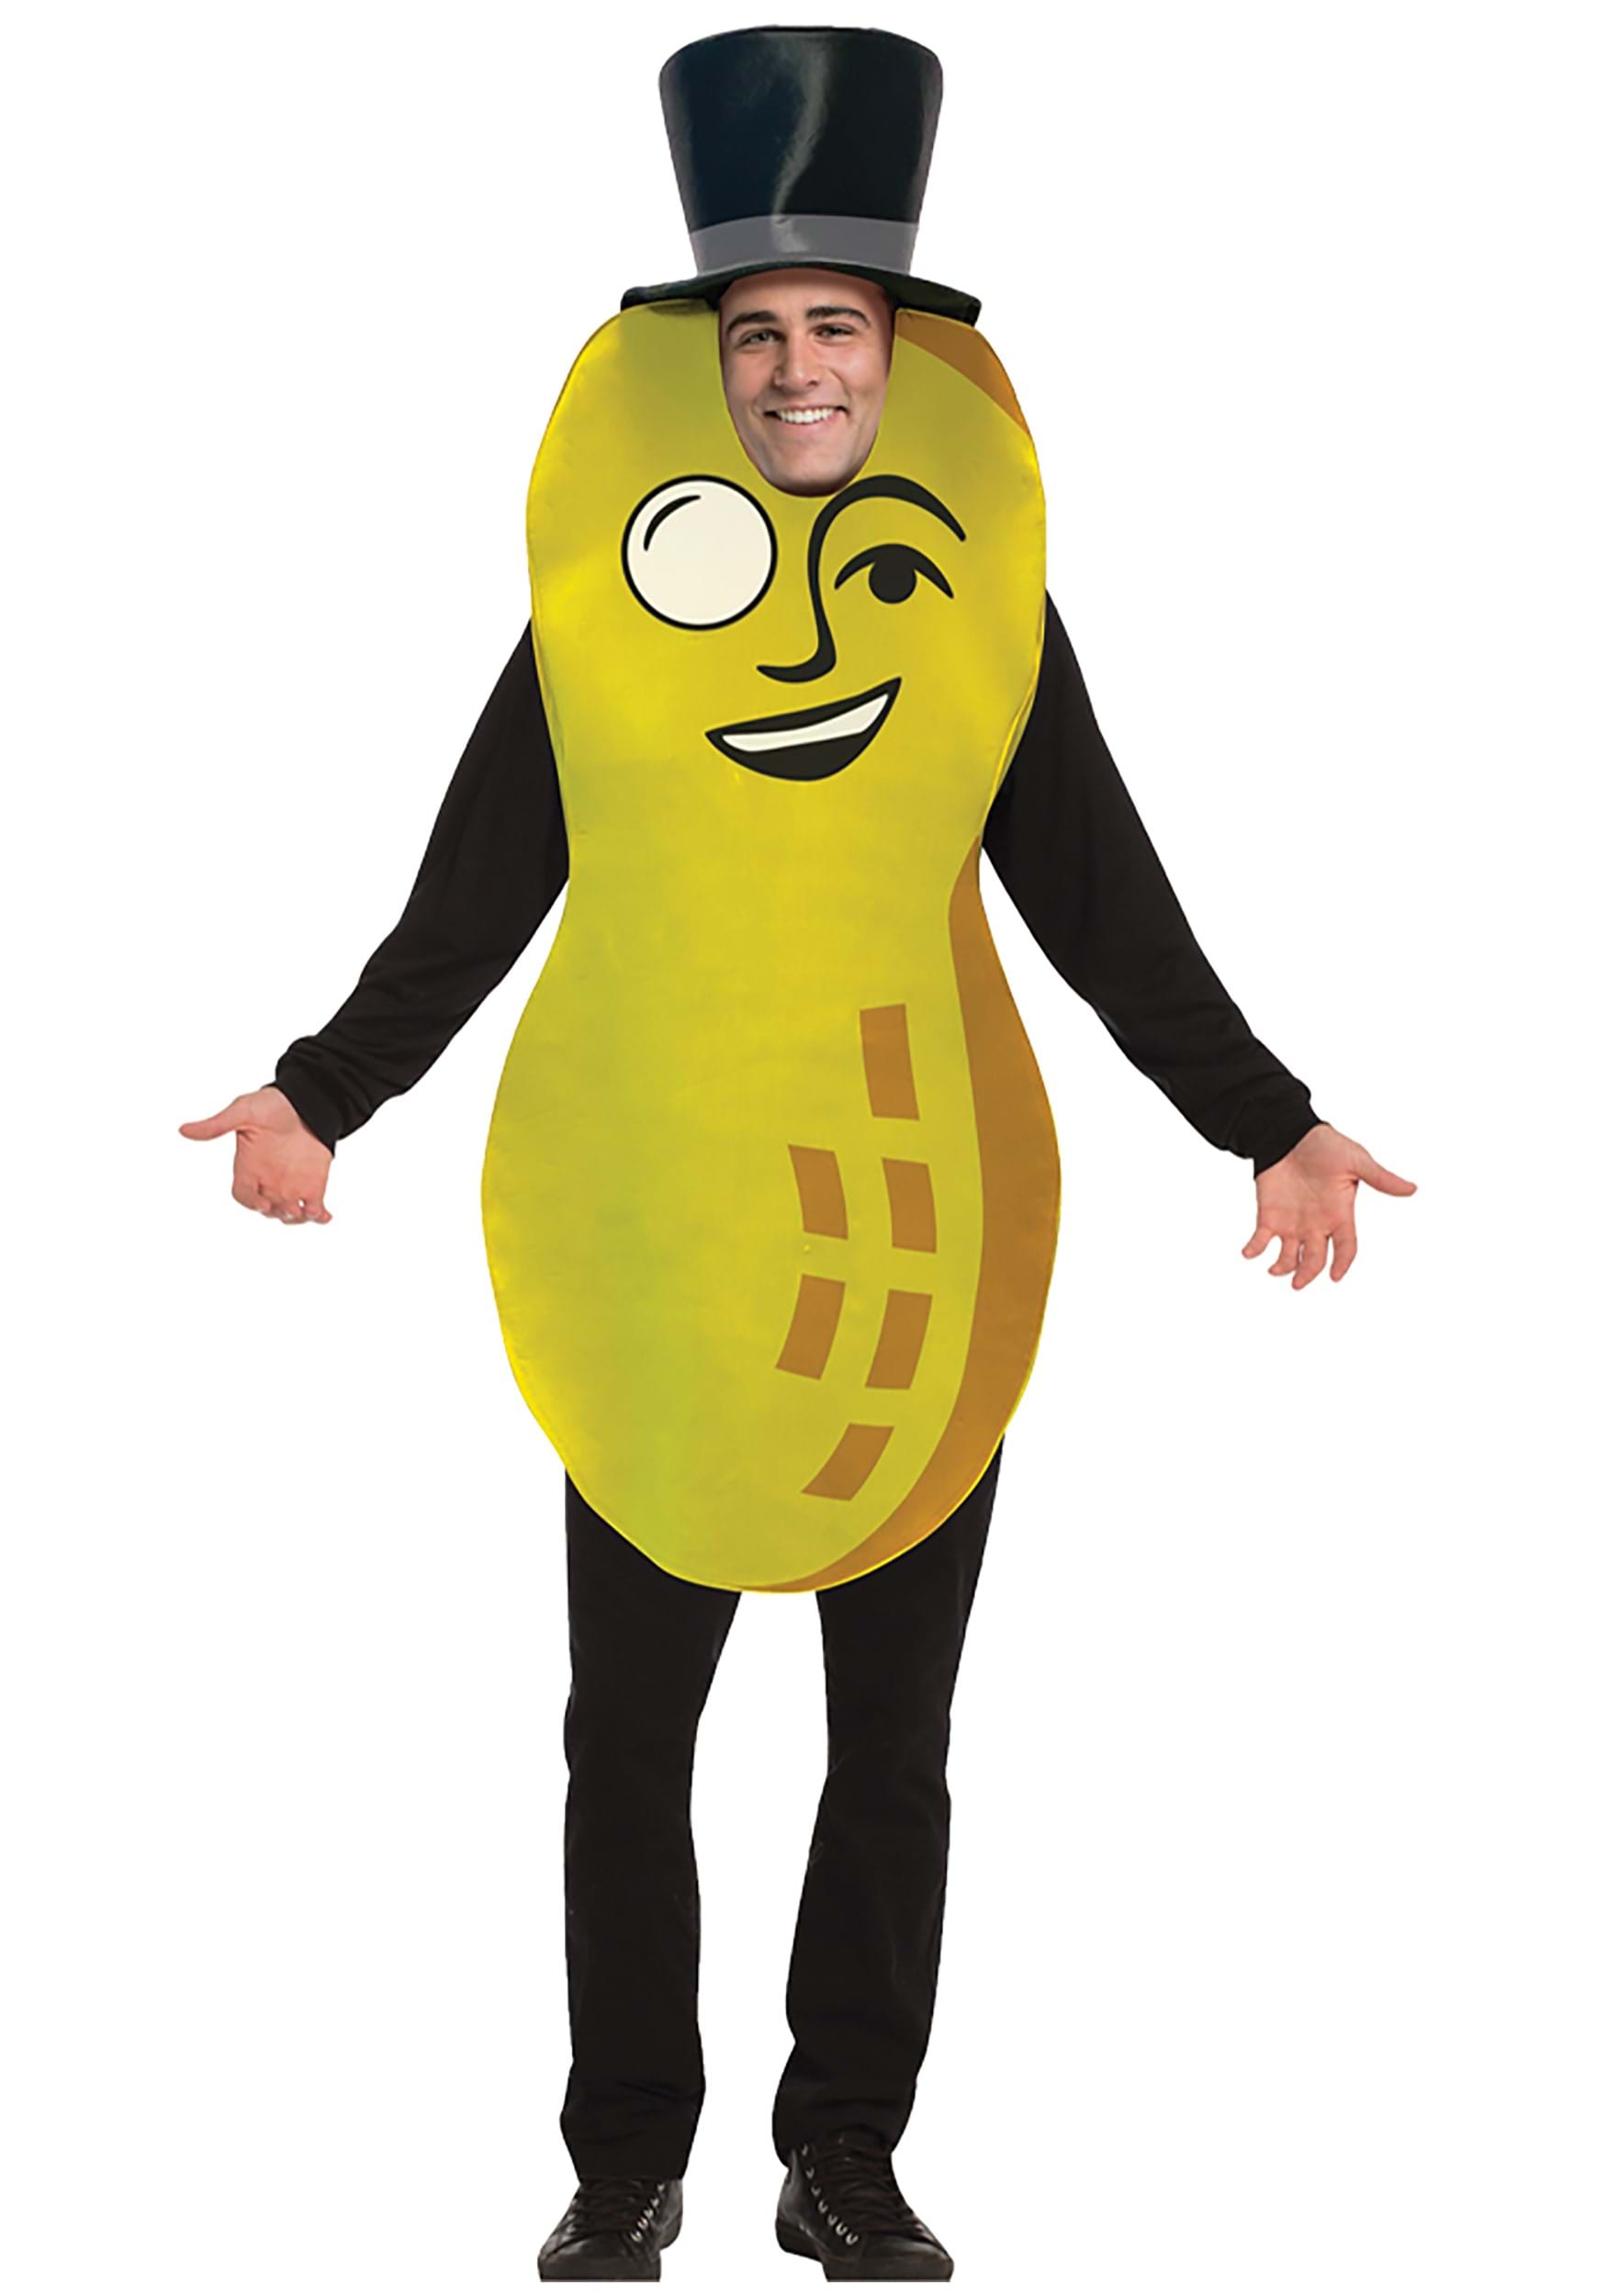 Mr. Peanut Costume for Adults